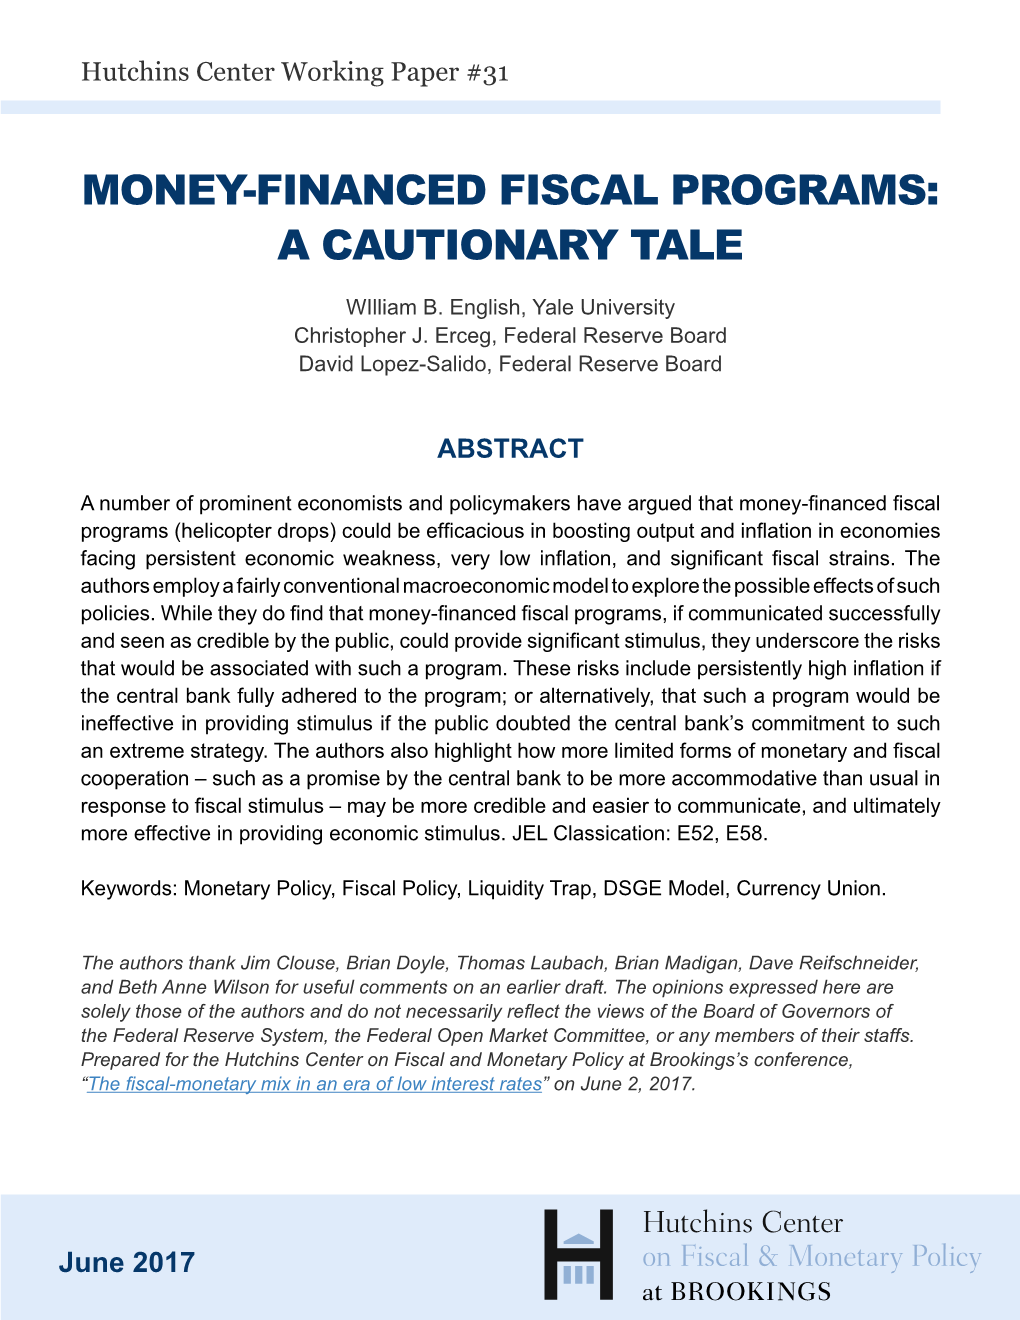 Money-Financed Fiscal Programs: a Cautionary Tale